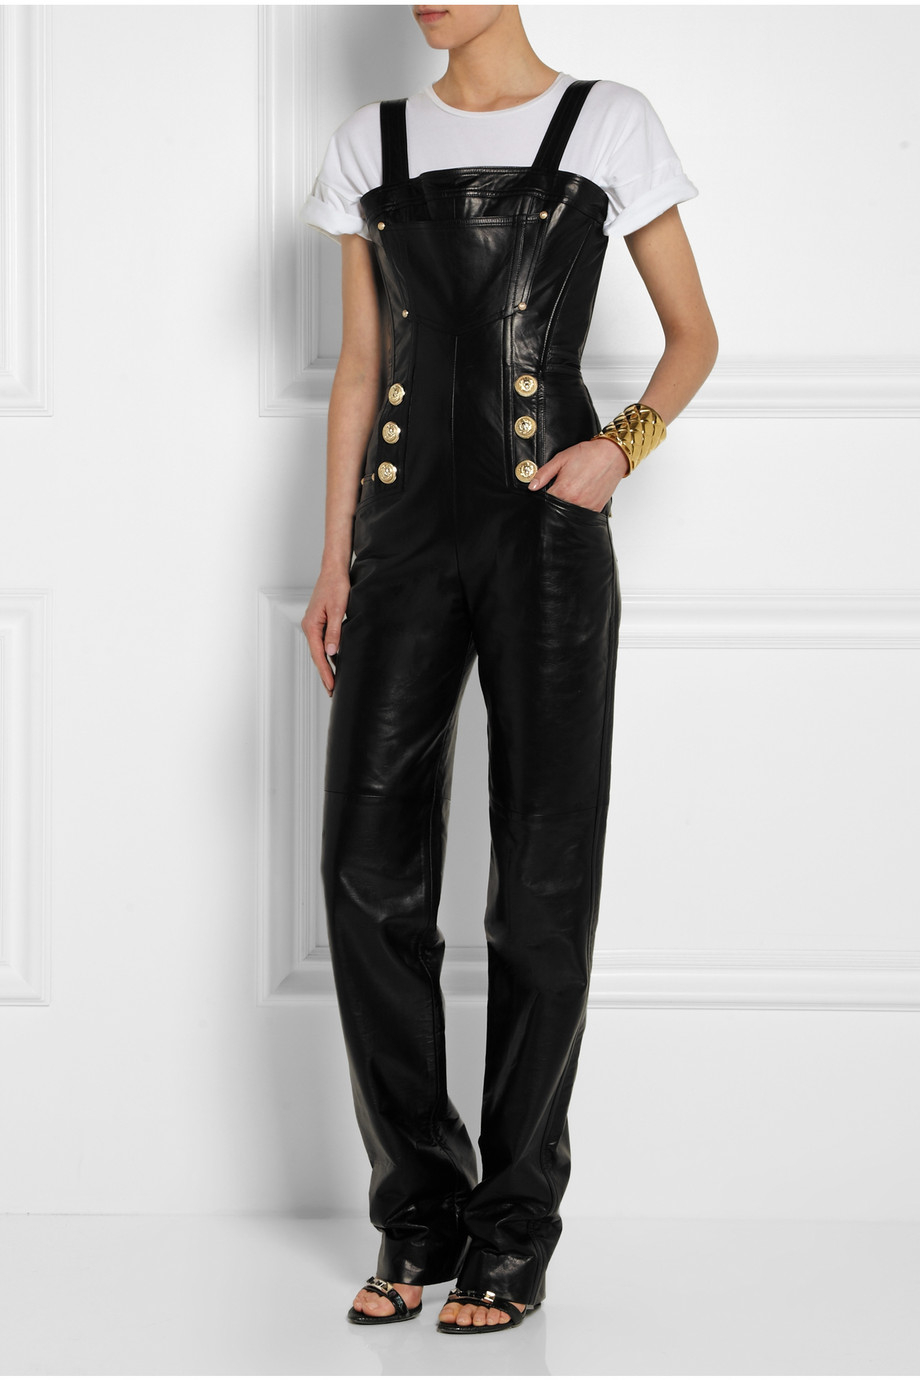 Balmain Leather Jumpsuit in Black - Lyst